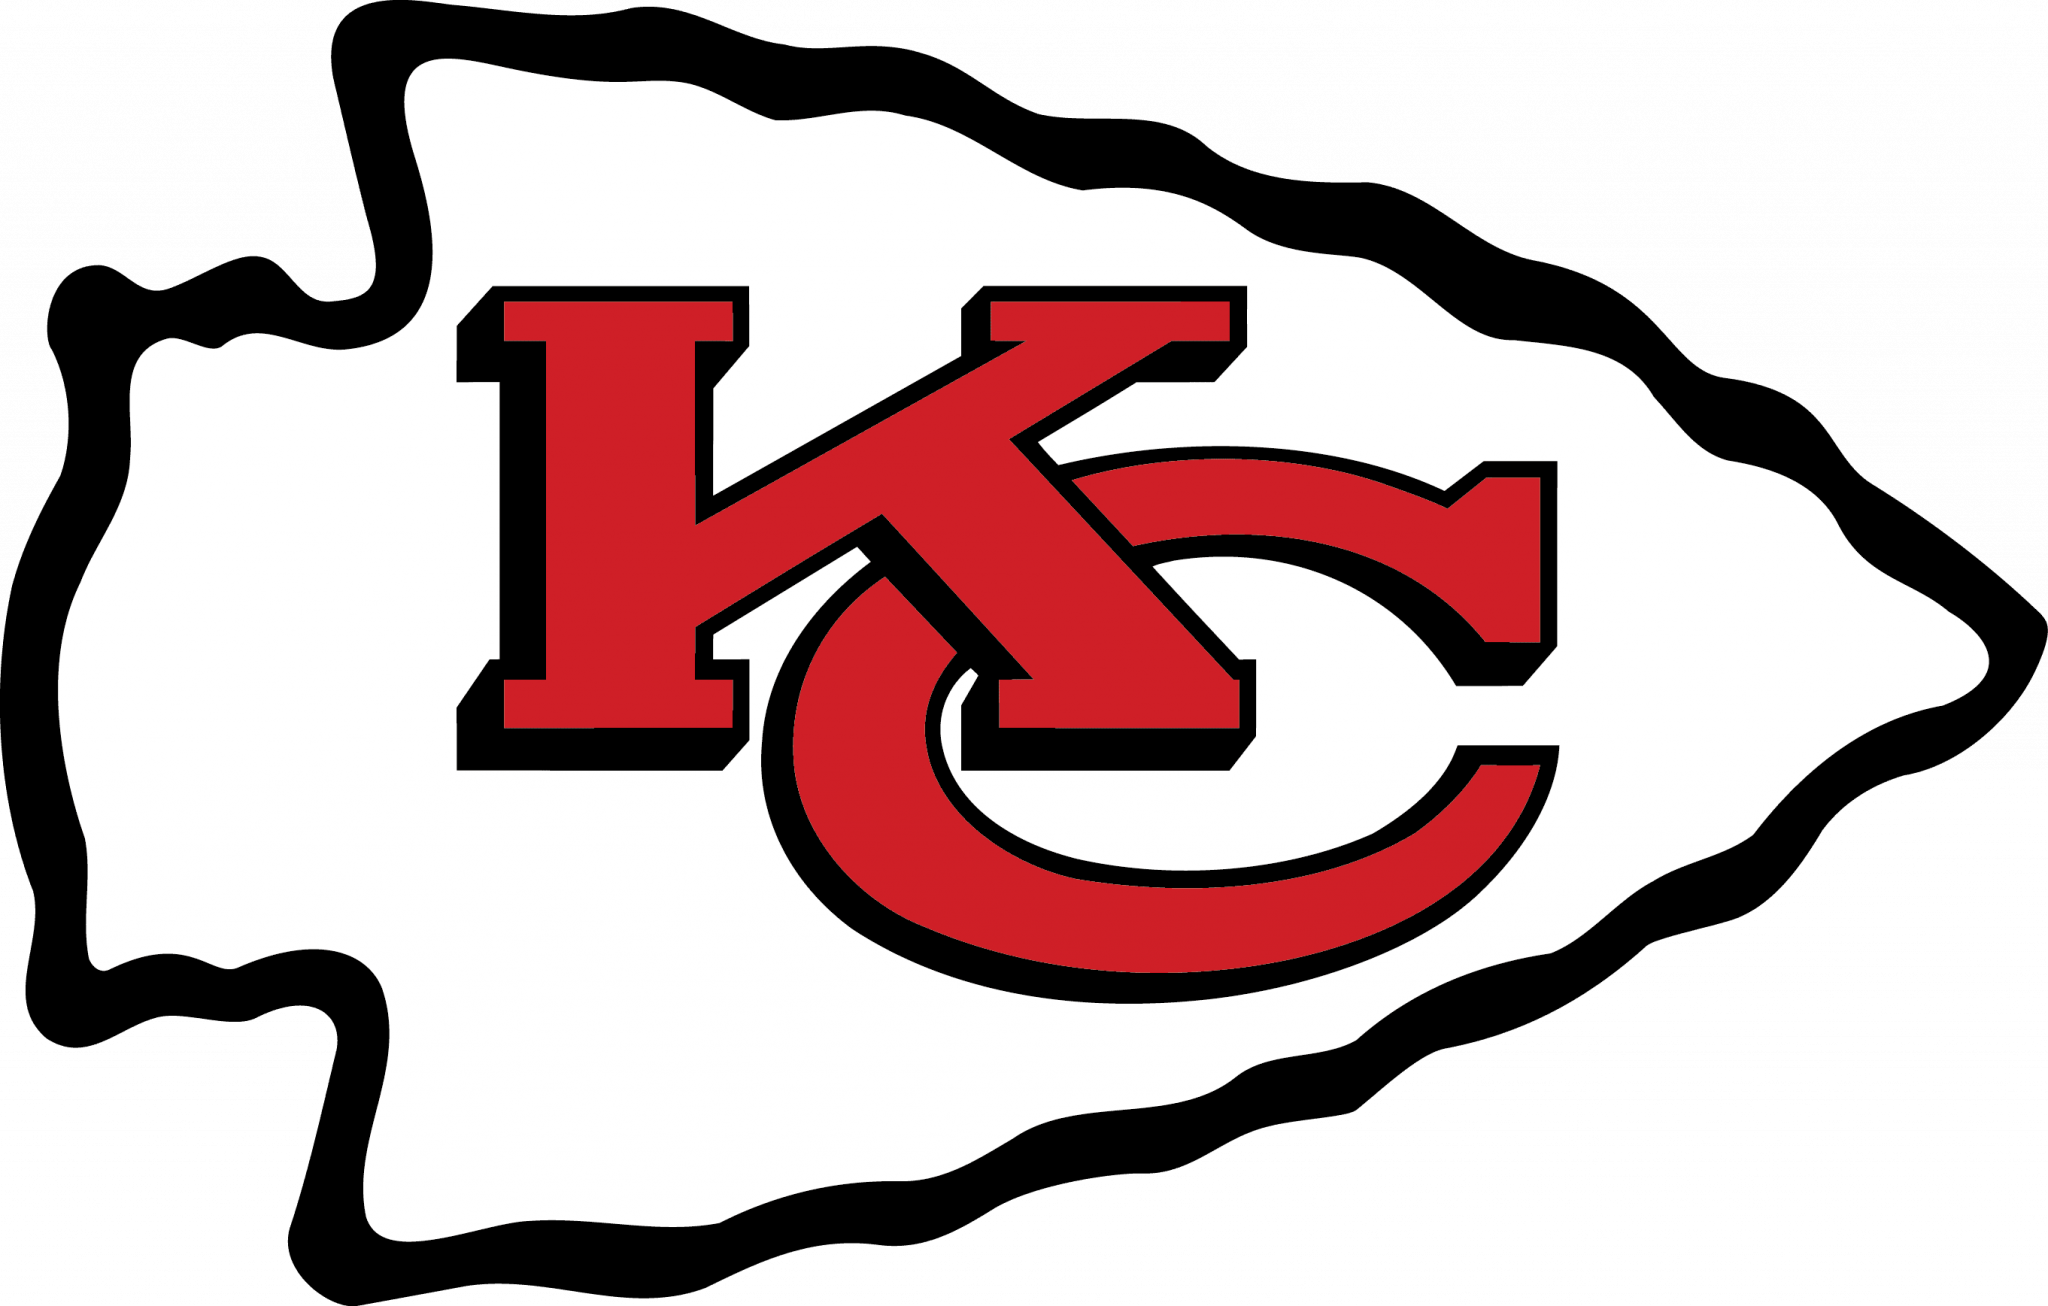 Kansas City Chiefs logo and history, Symbol, Helmets, Uniform Nfl teams logo ang history